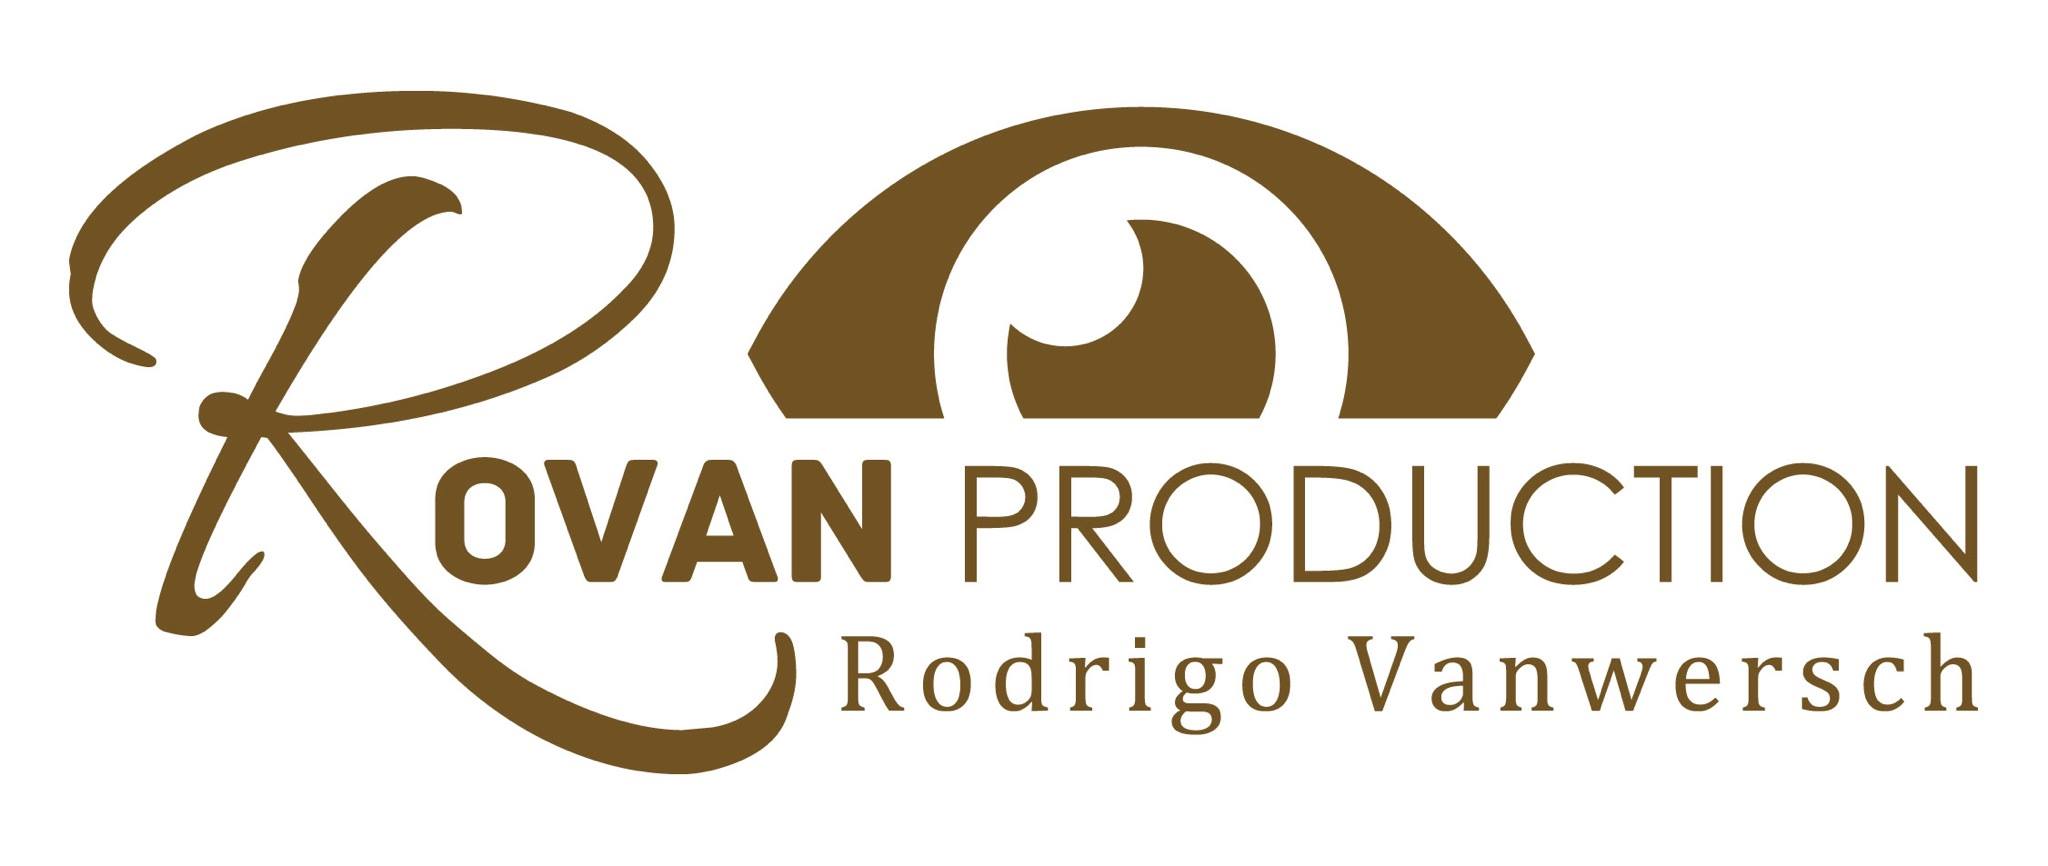 Rovan Production